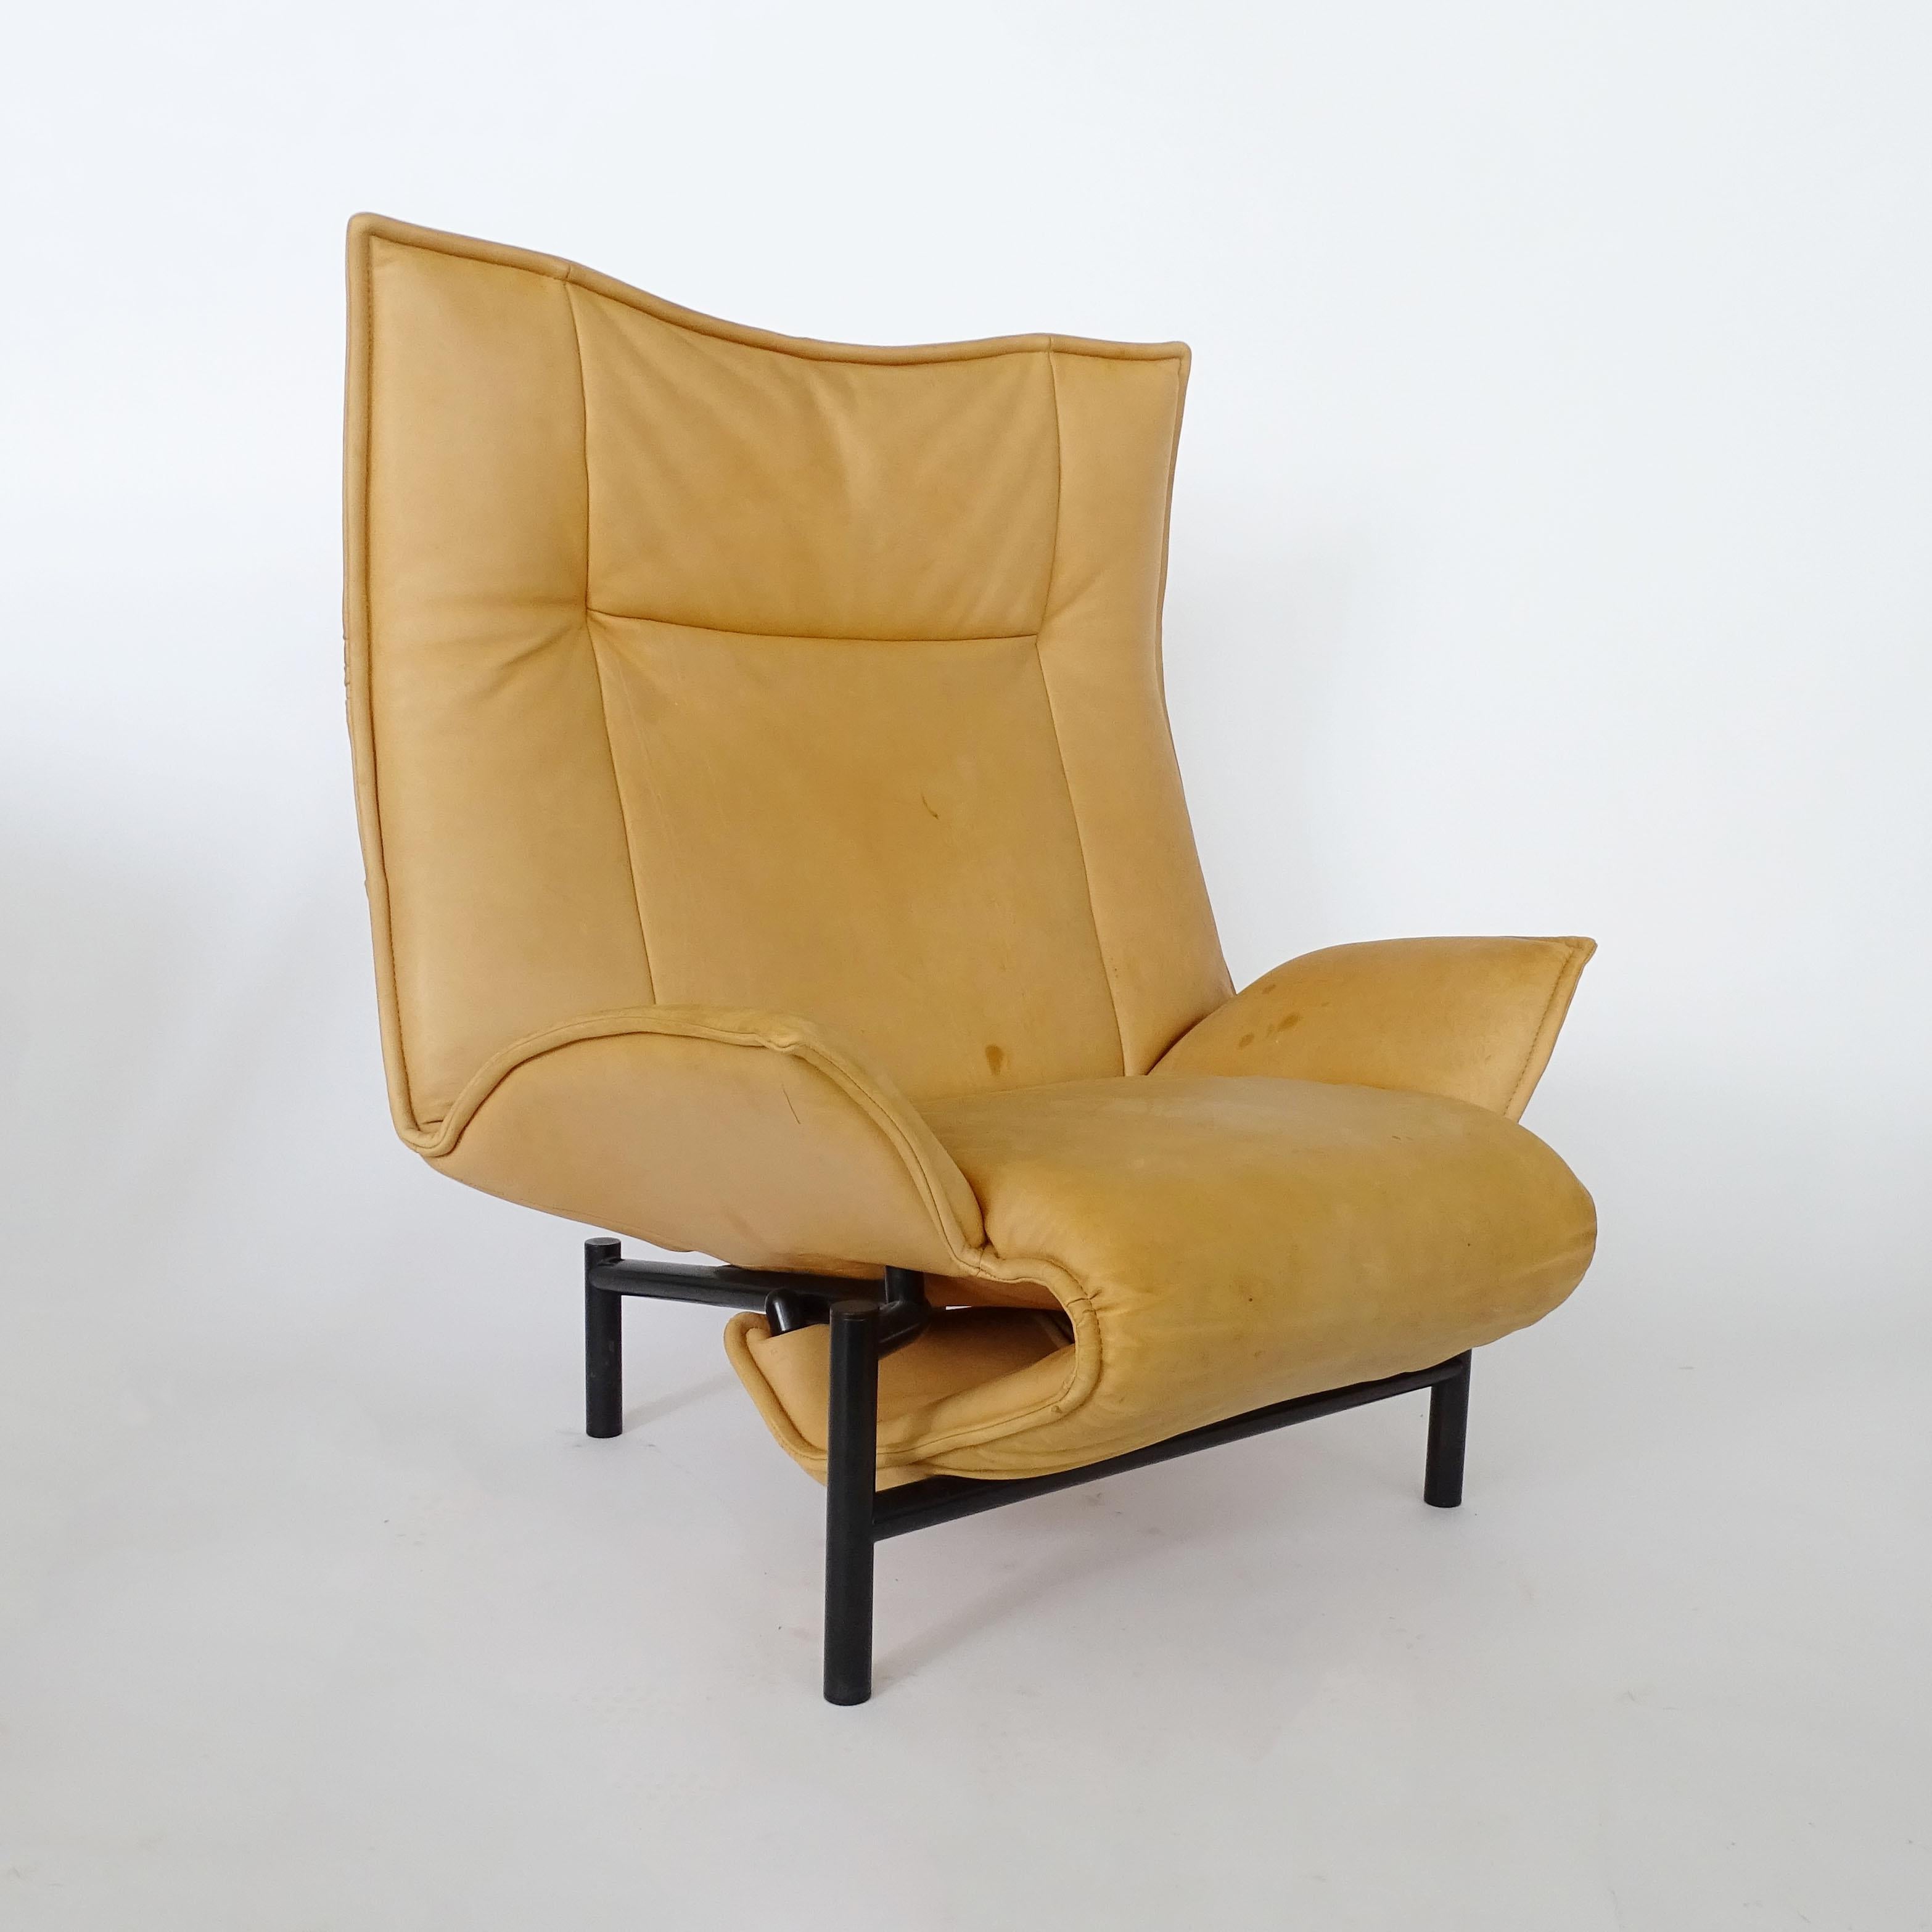 Post-Modern Vico Magistretti Veranda Lounge Chair for Cassina, Italy, 1980s For Sale